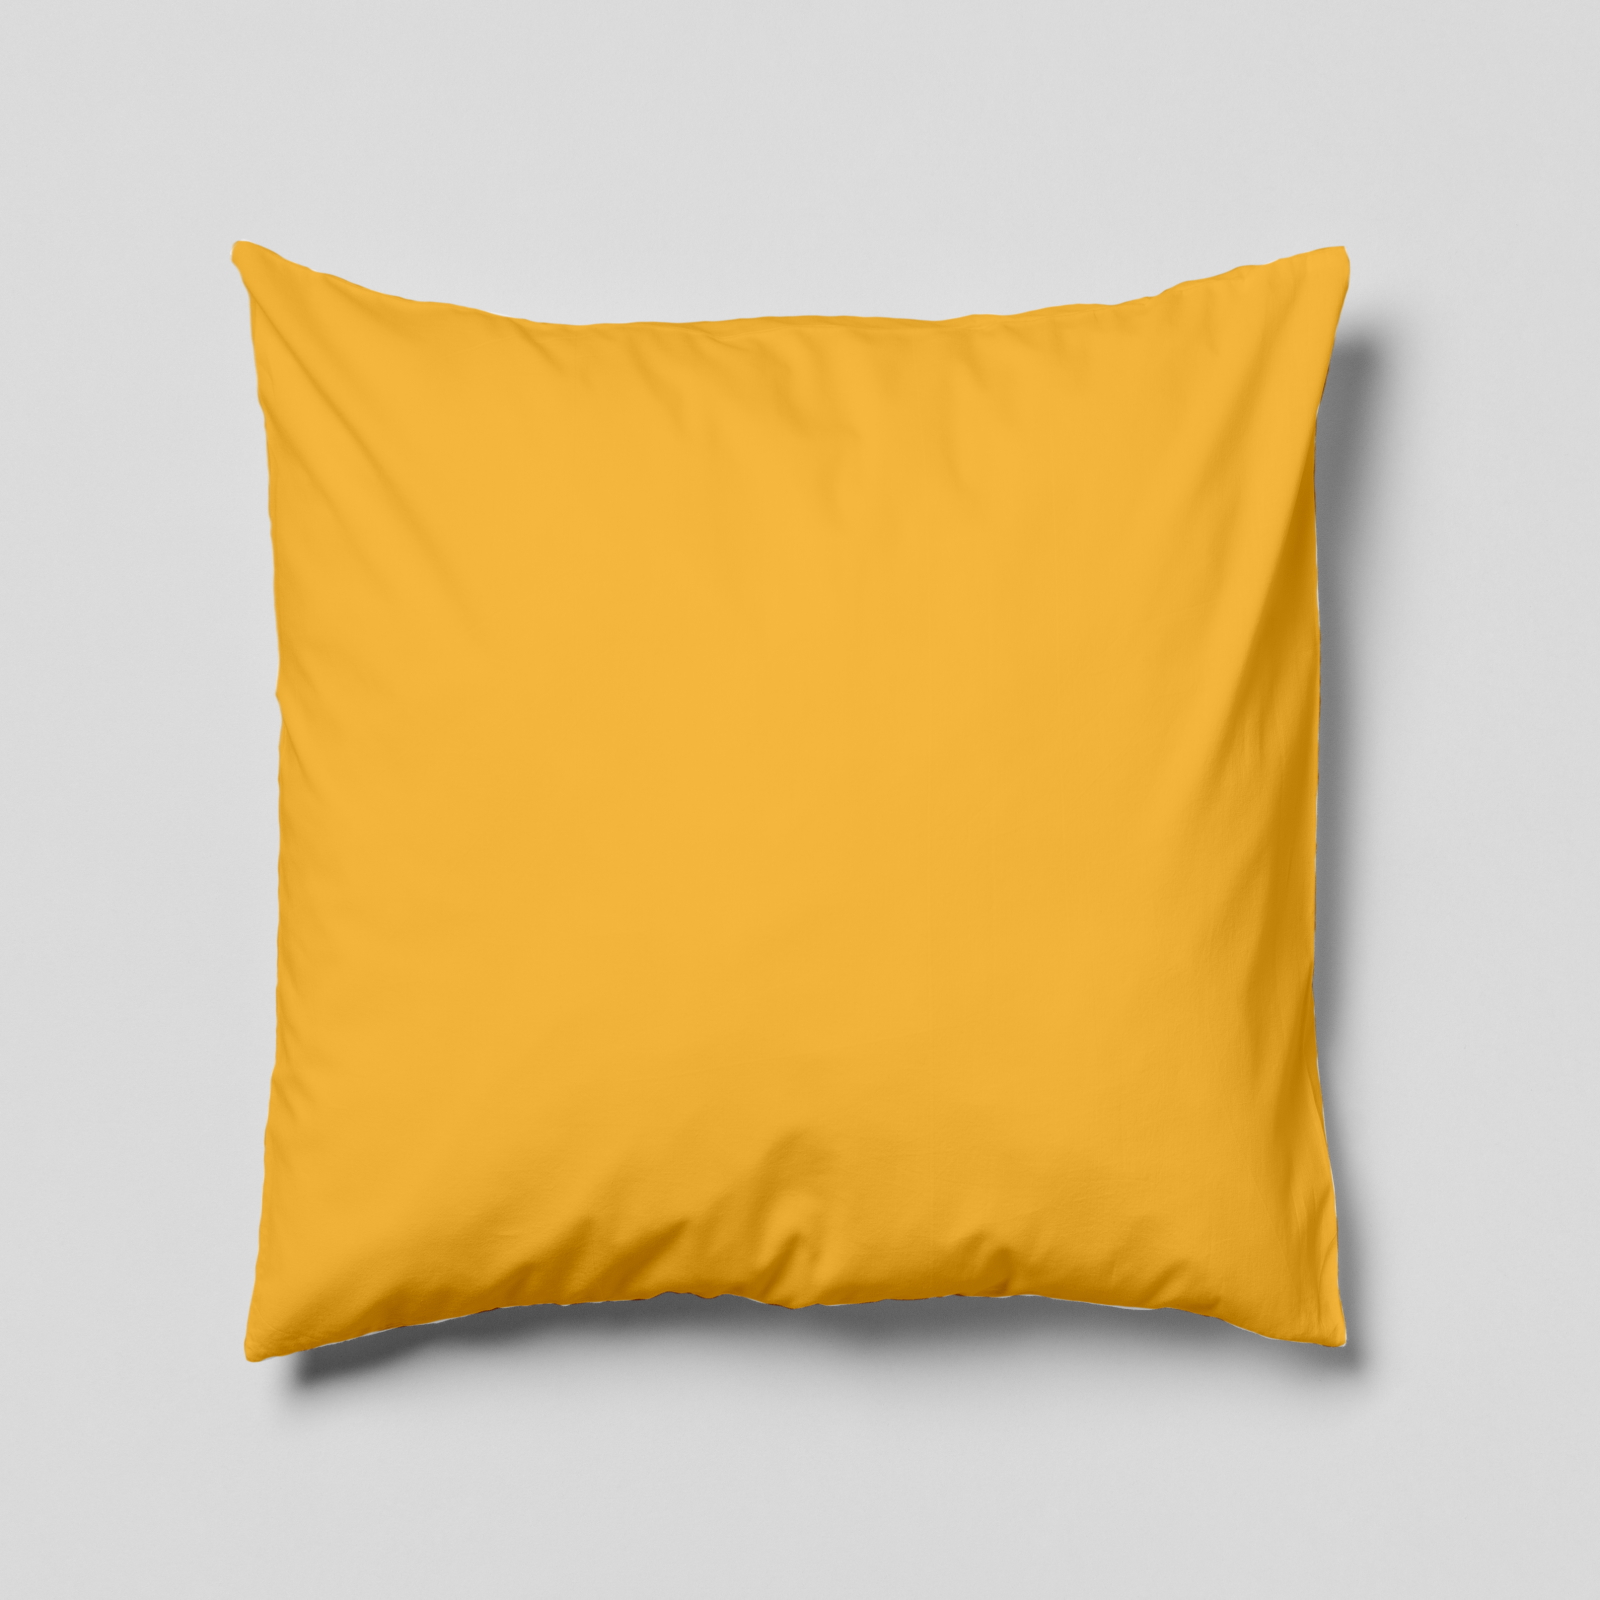 Komplettkissen Polyester-Gelb / 40x40 cm